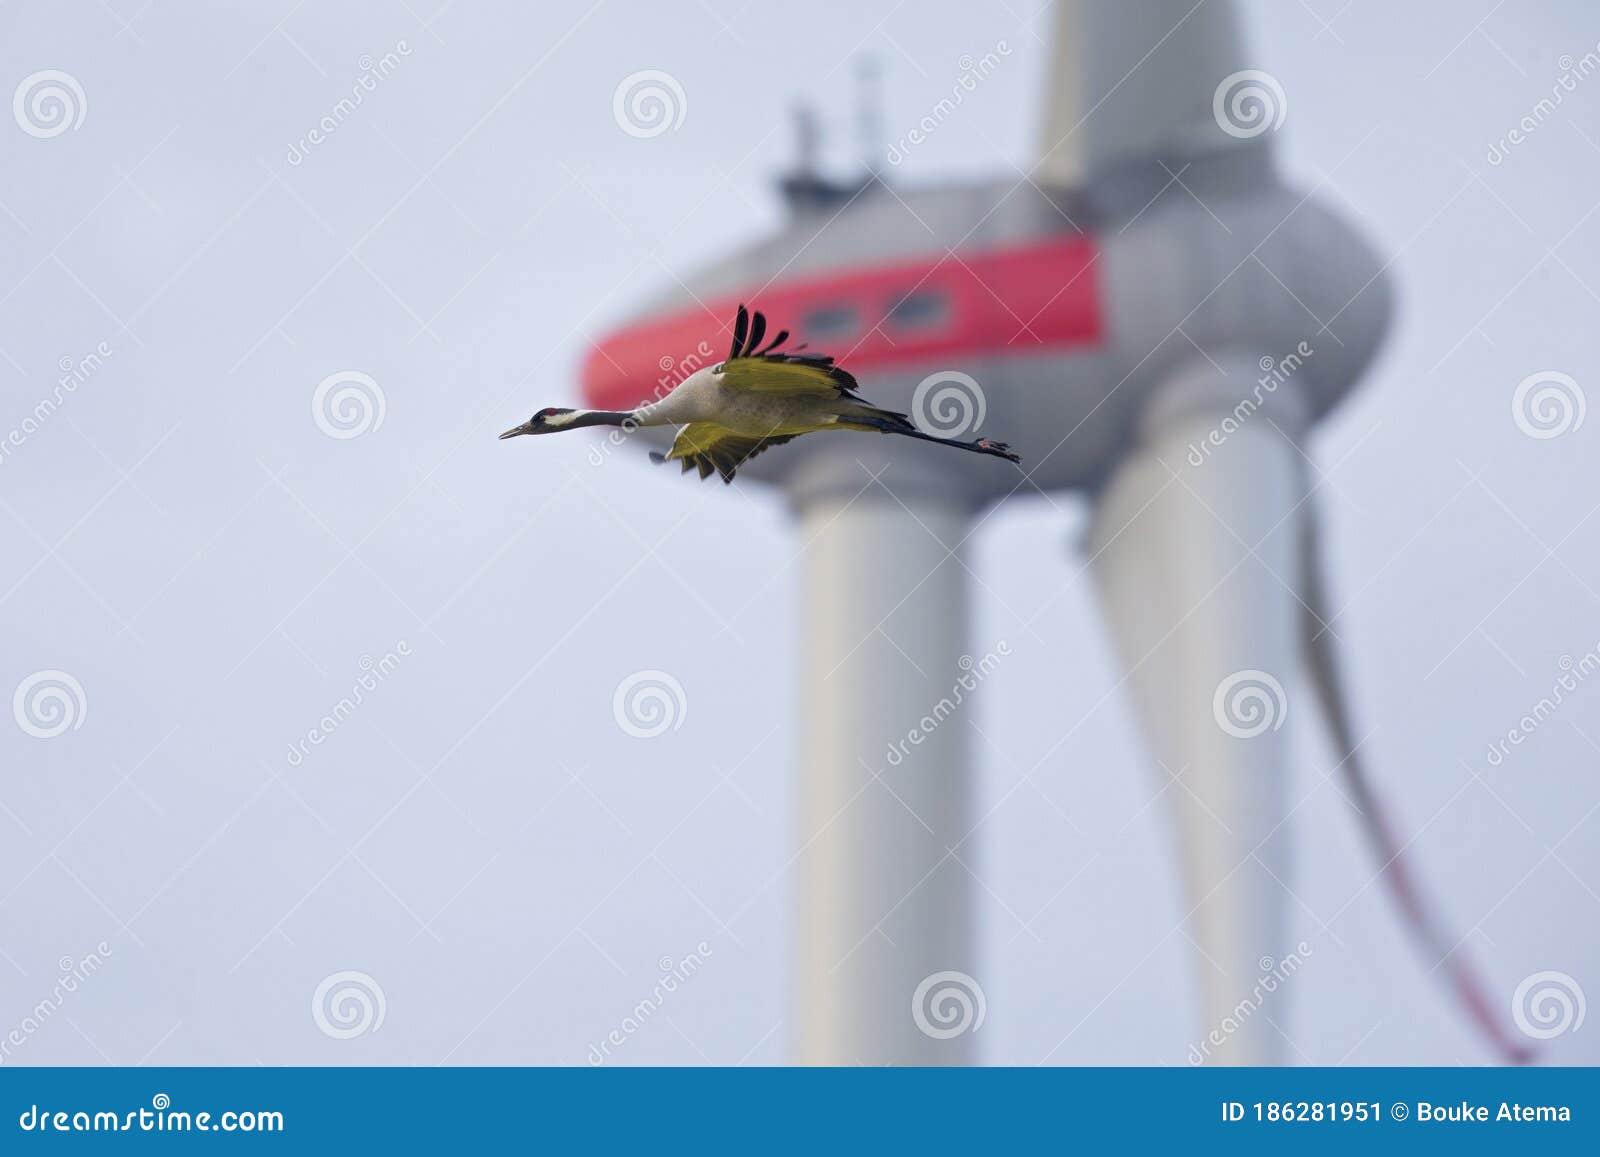 an adult crane bird flying dangerously near the blades of a wind turbine.